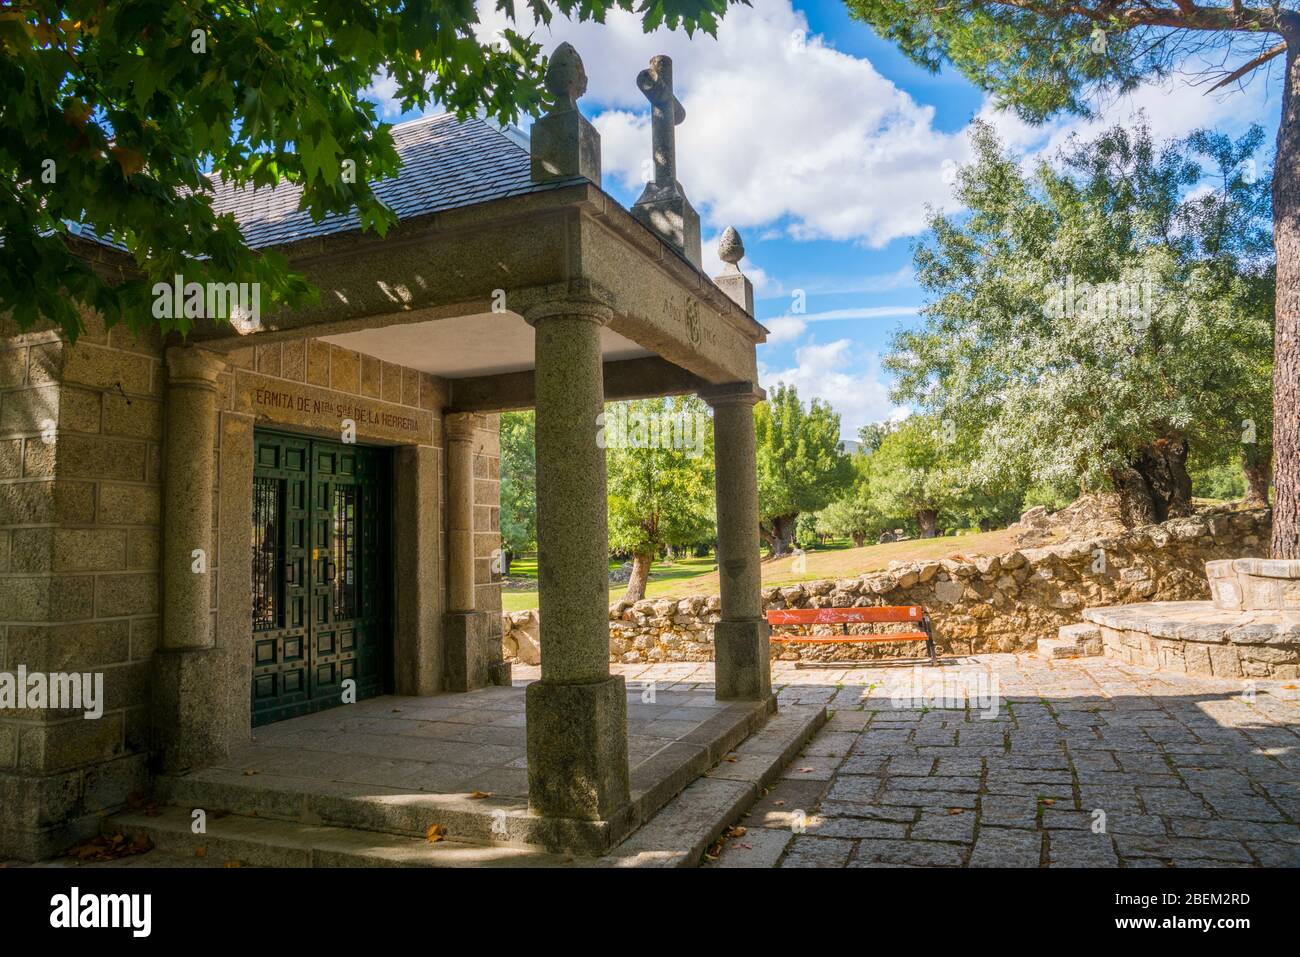 Church and La Herreria park. El Escorial, Madrid province, Spain. Stock Photo